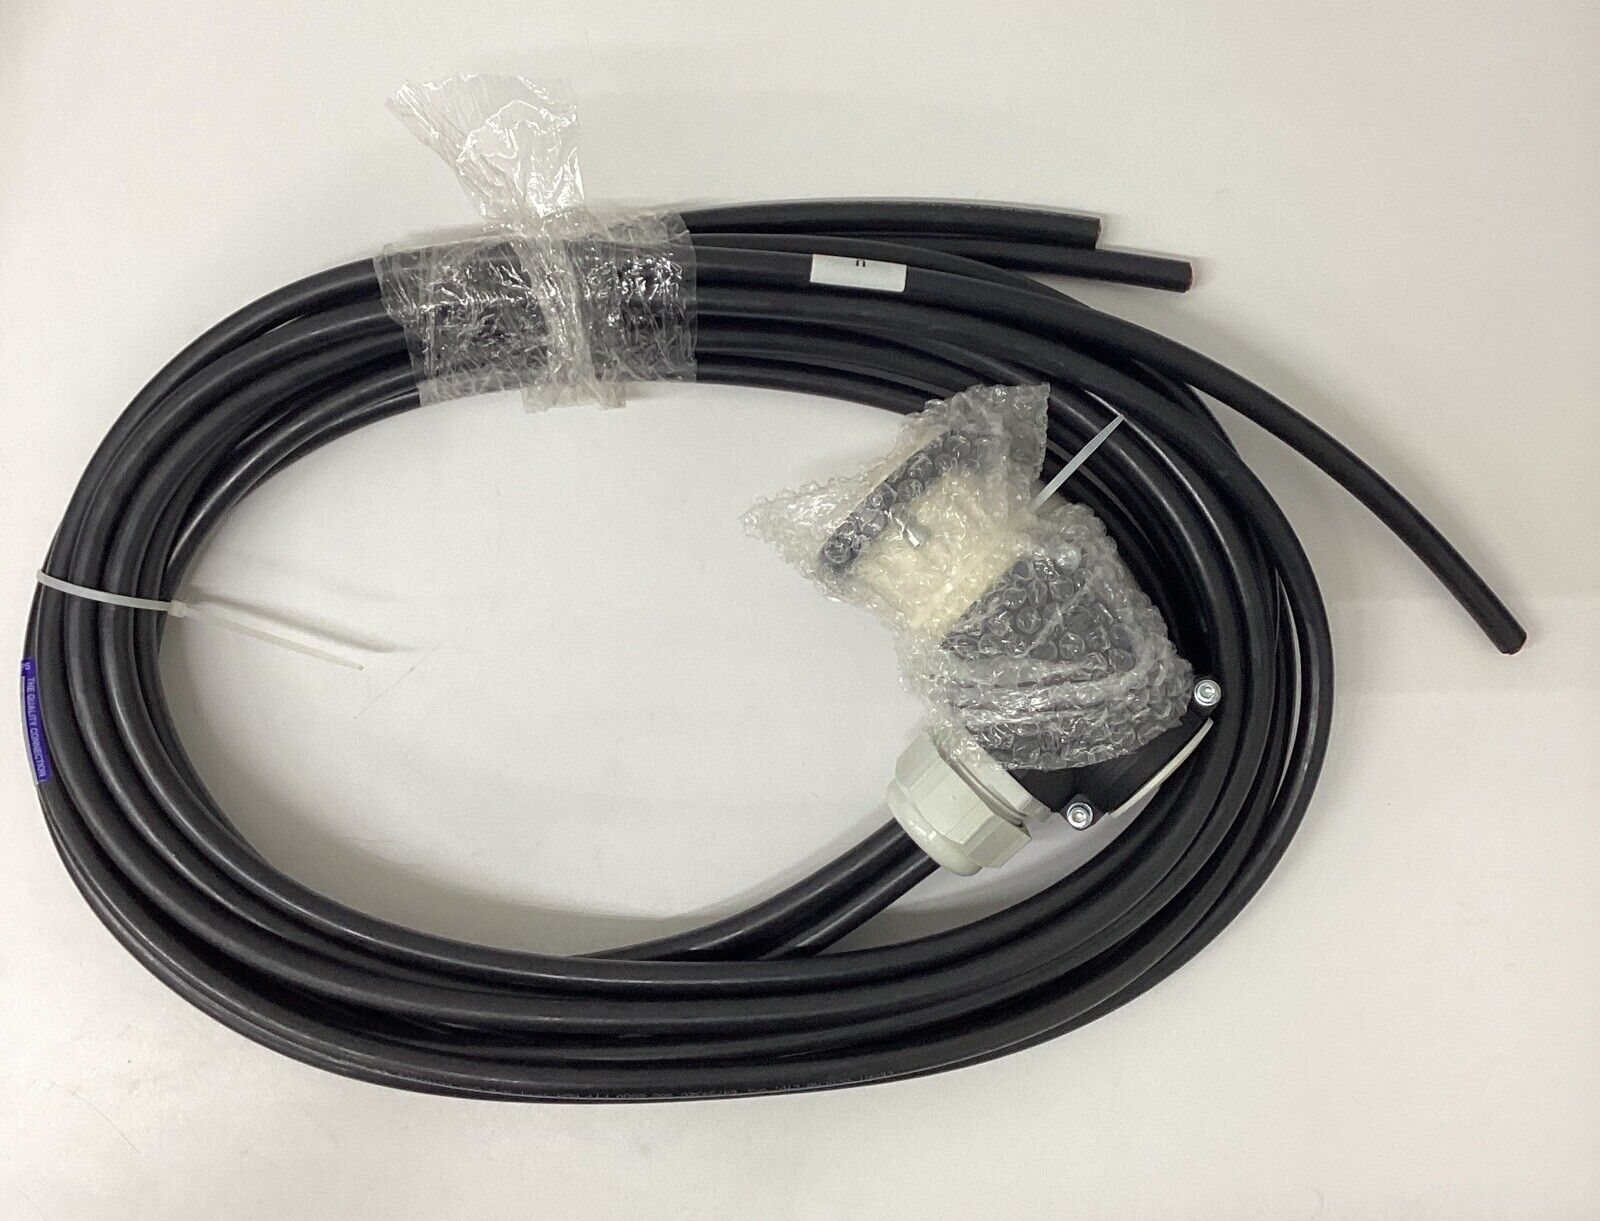 Leoni 3.209.16.3001B 3 Pole Primary Power Cable (CBL155) - 0